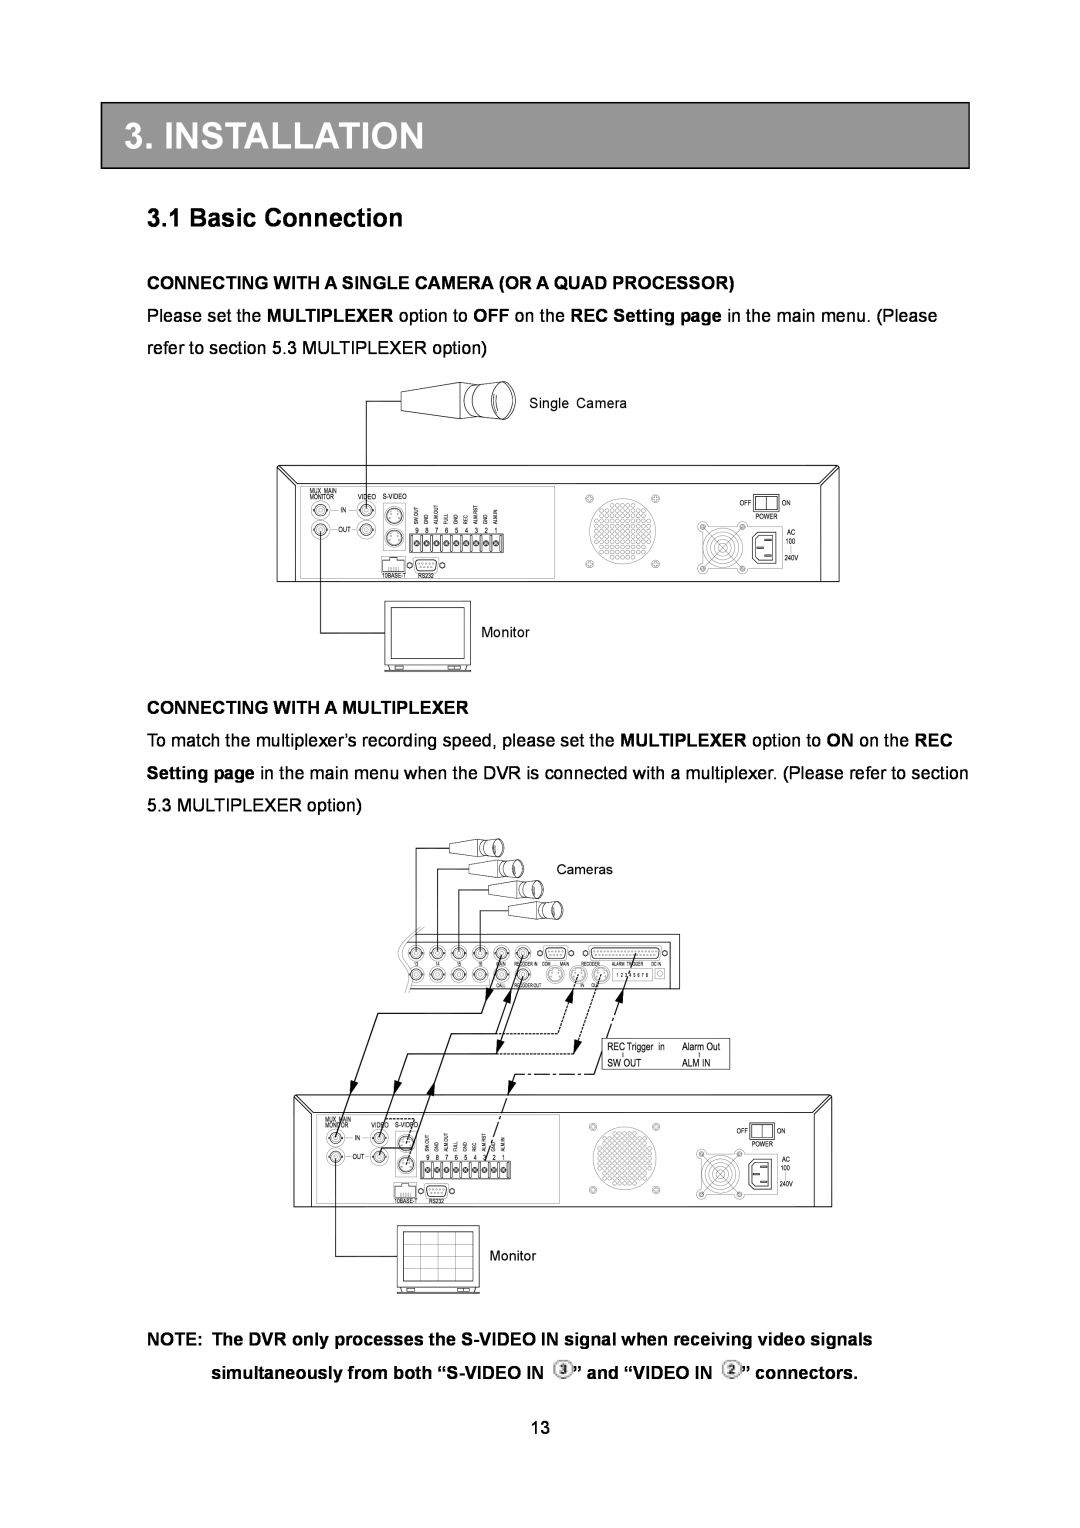 Toshiba KV-HD01A manual Installation, Basic Connection 